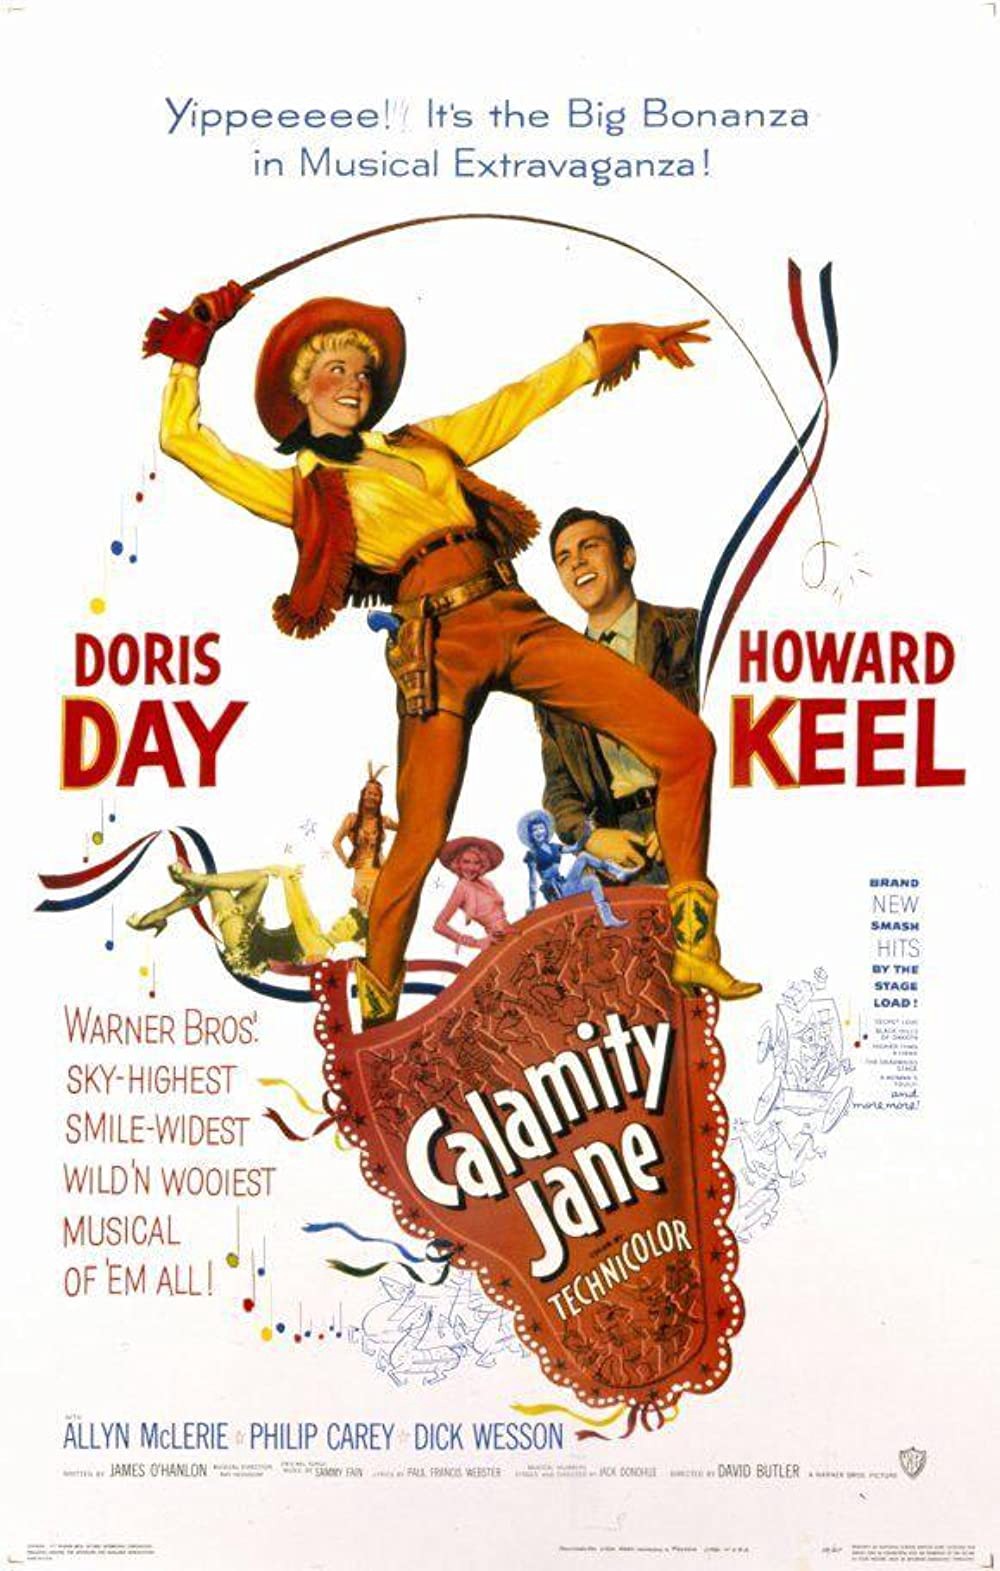 Calamity Jane (film) Warner Bros image photo